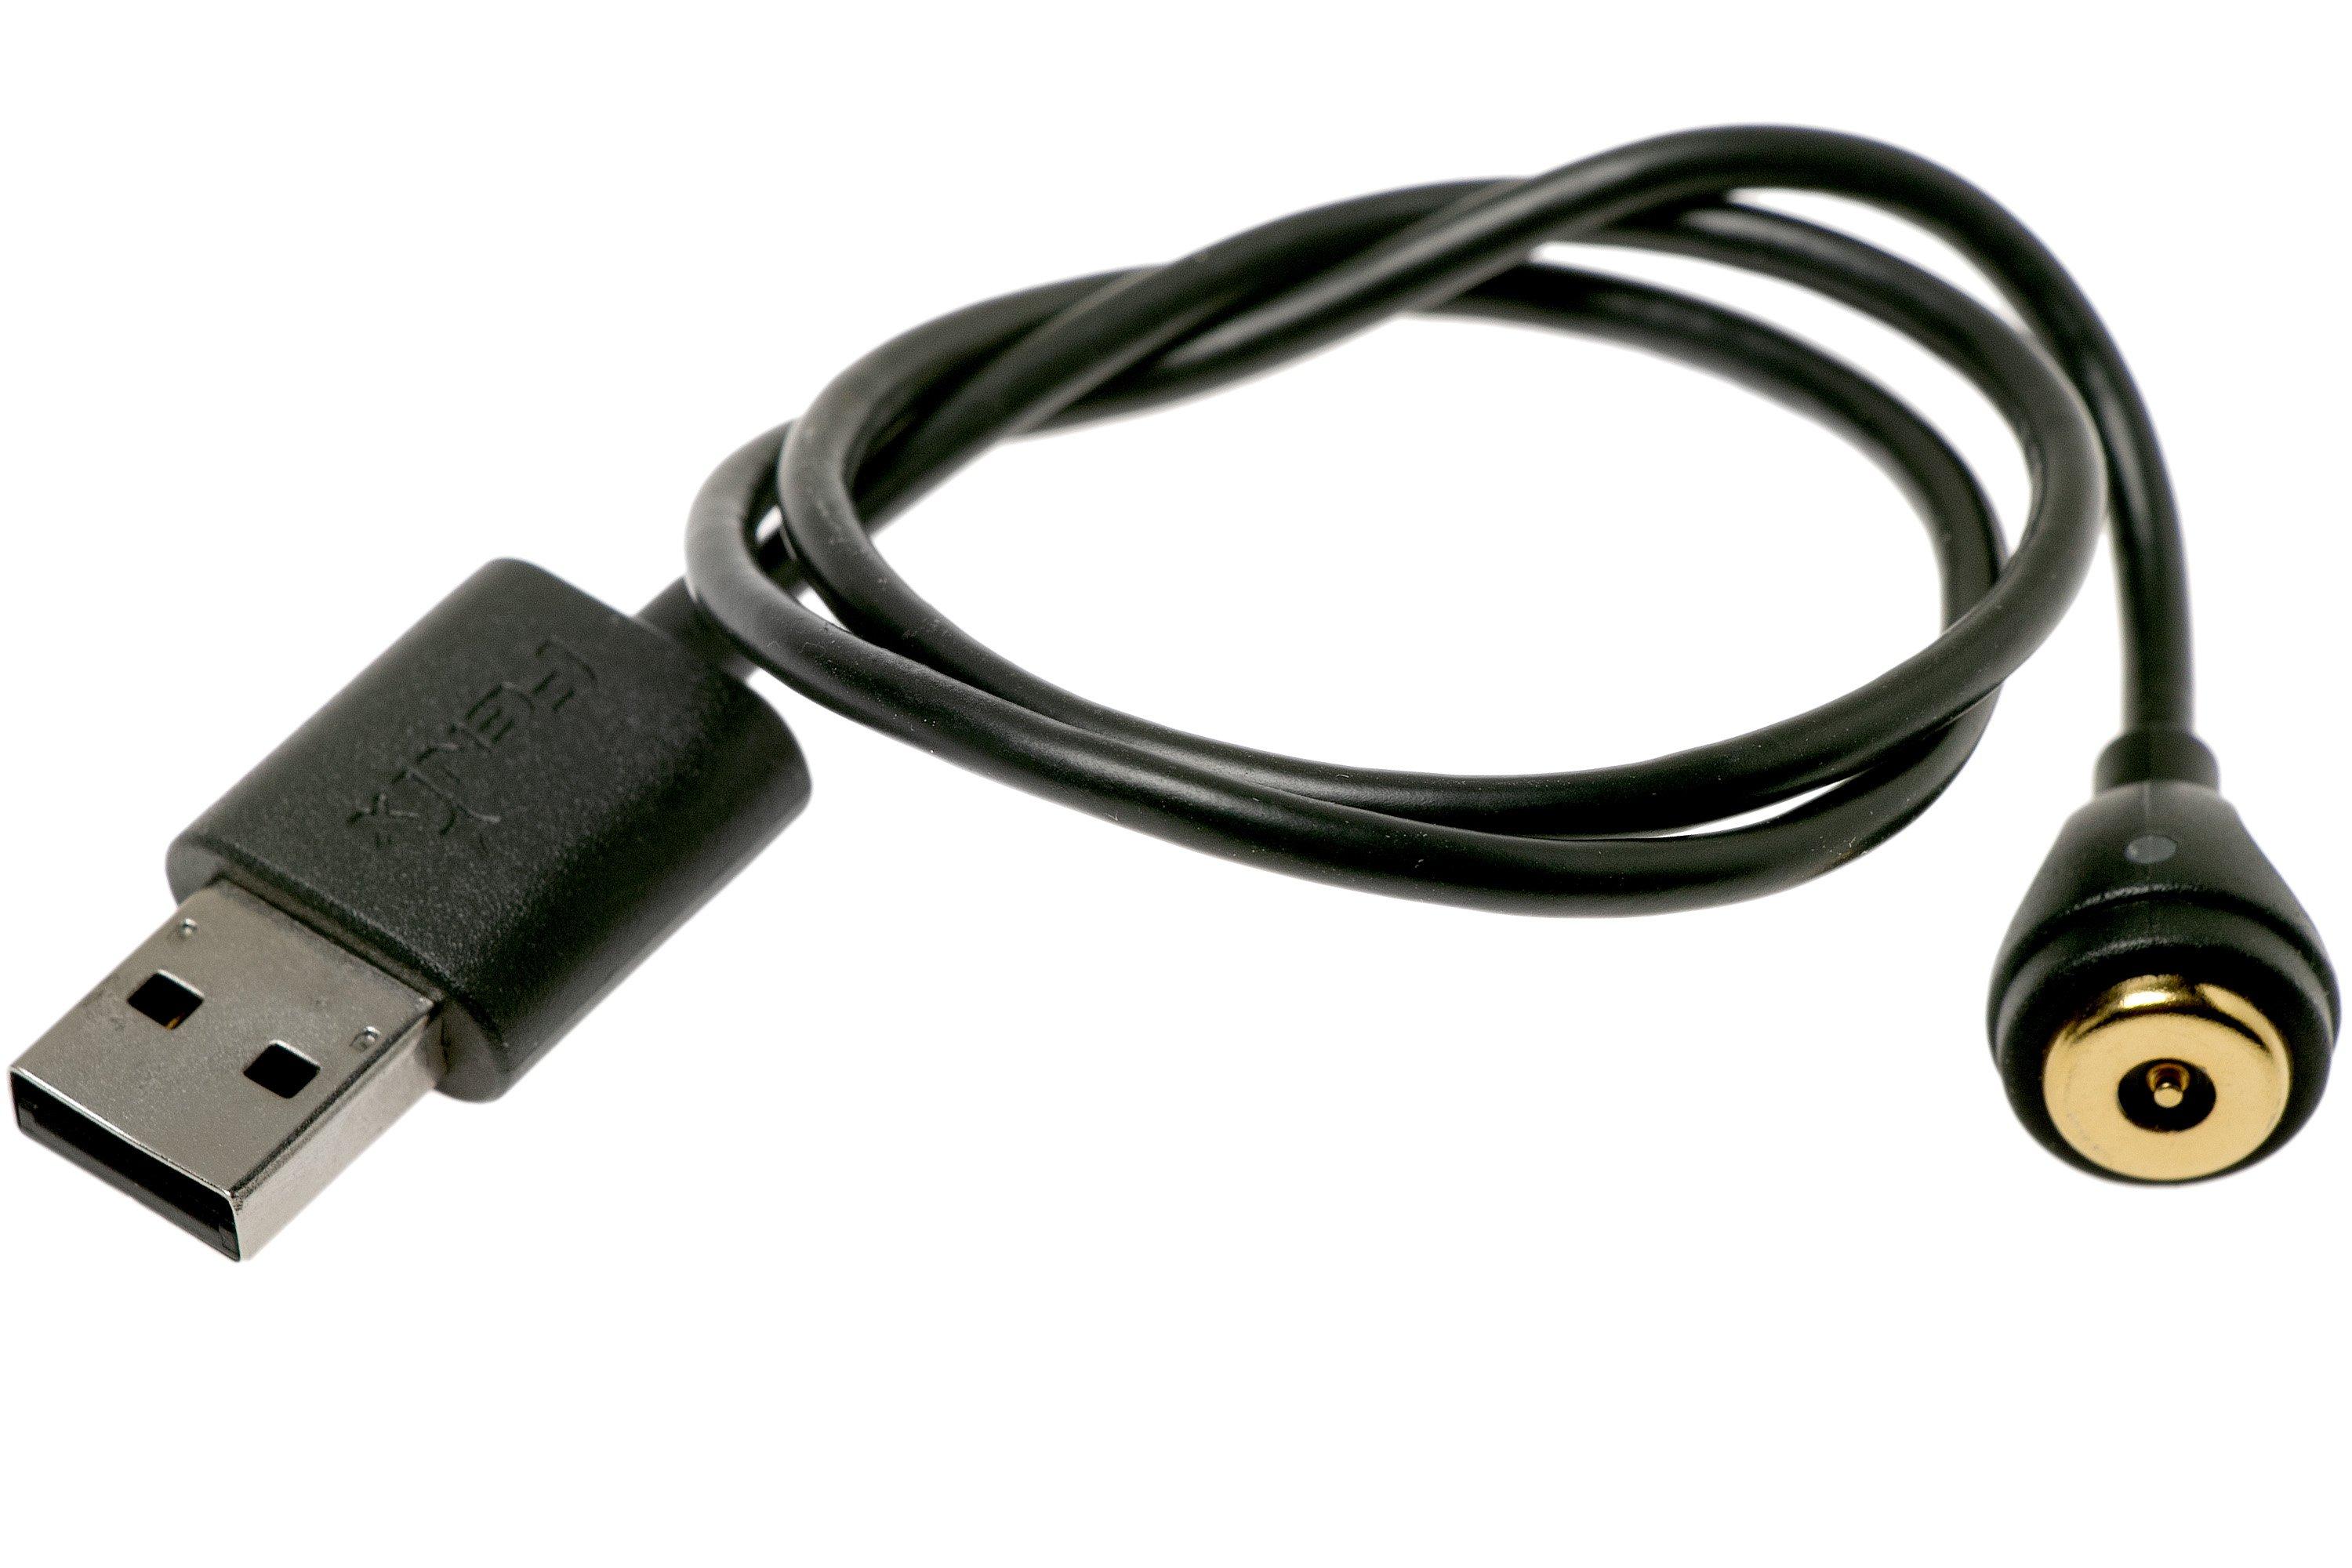 Fenix USB power adapter